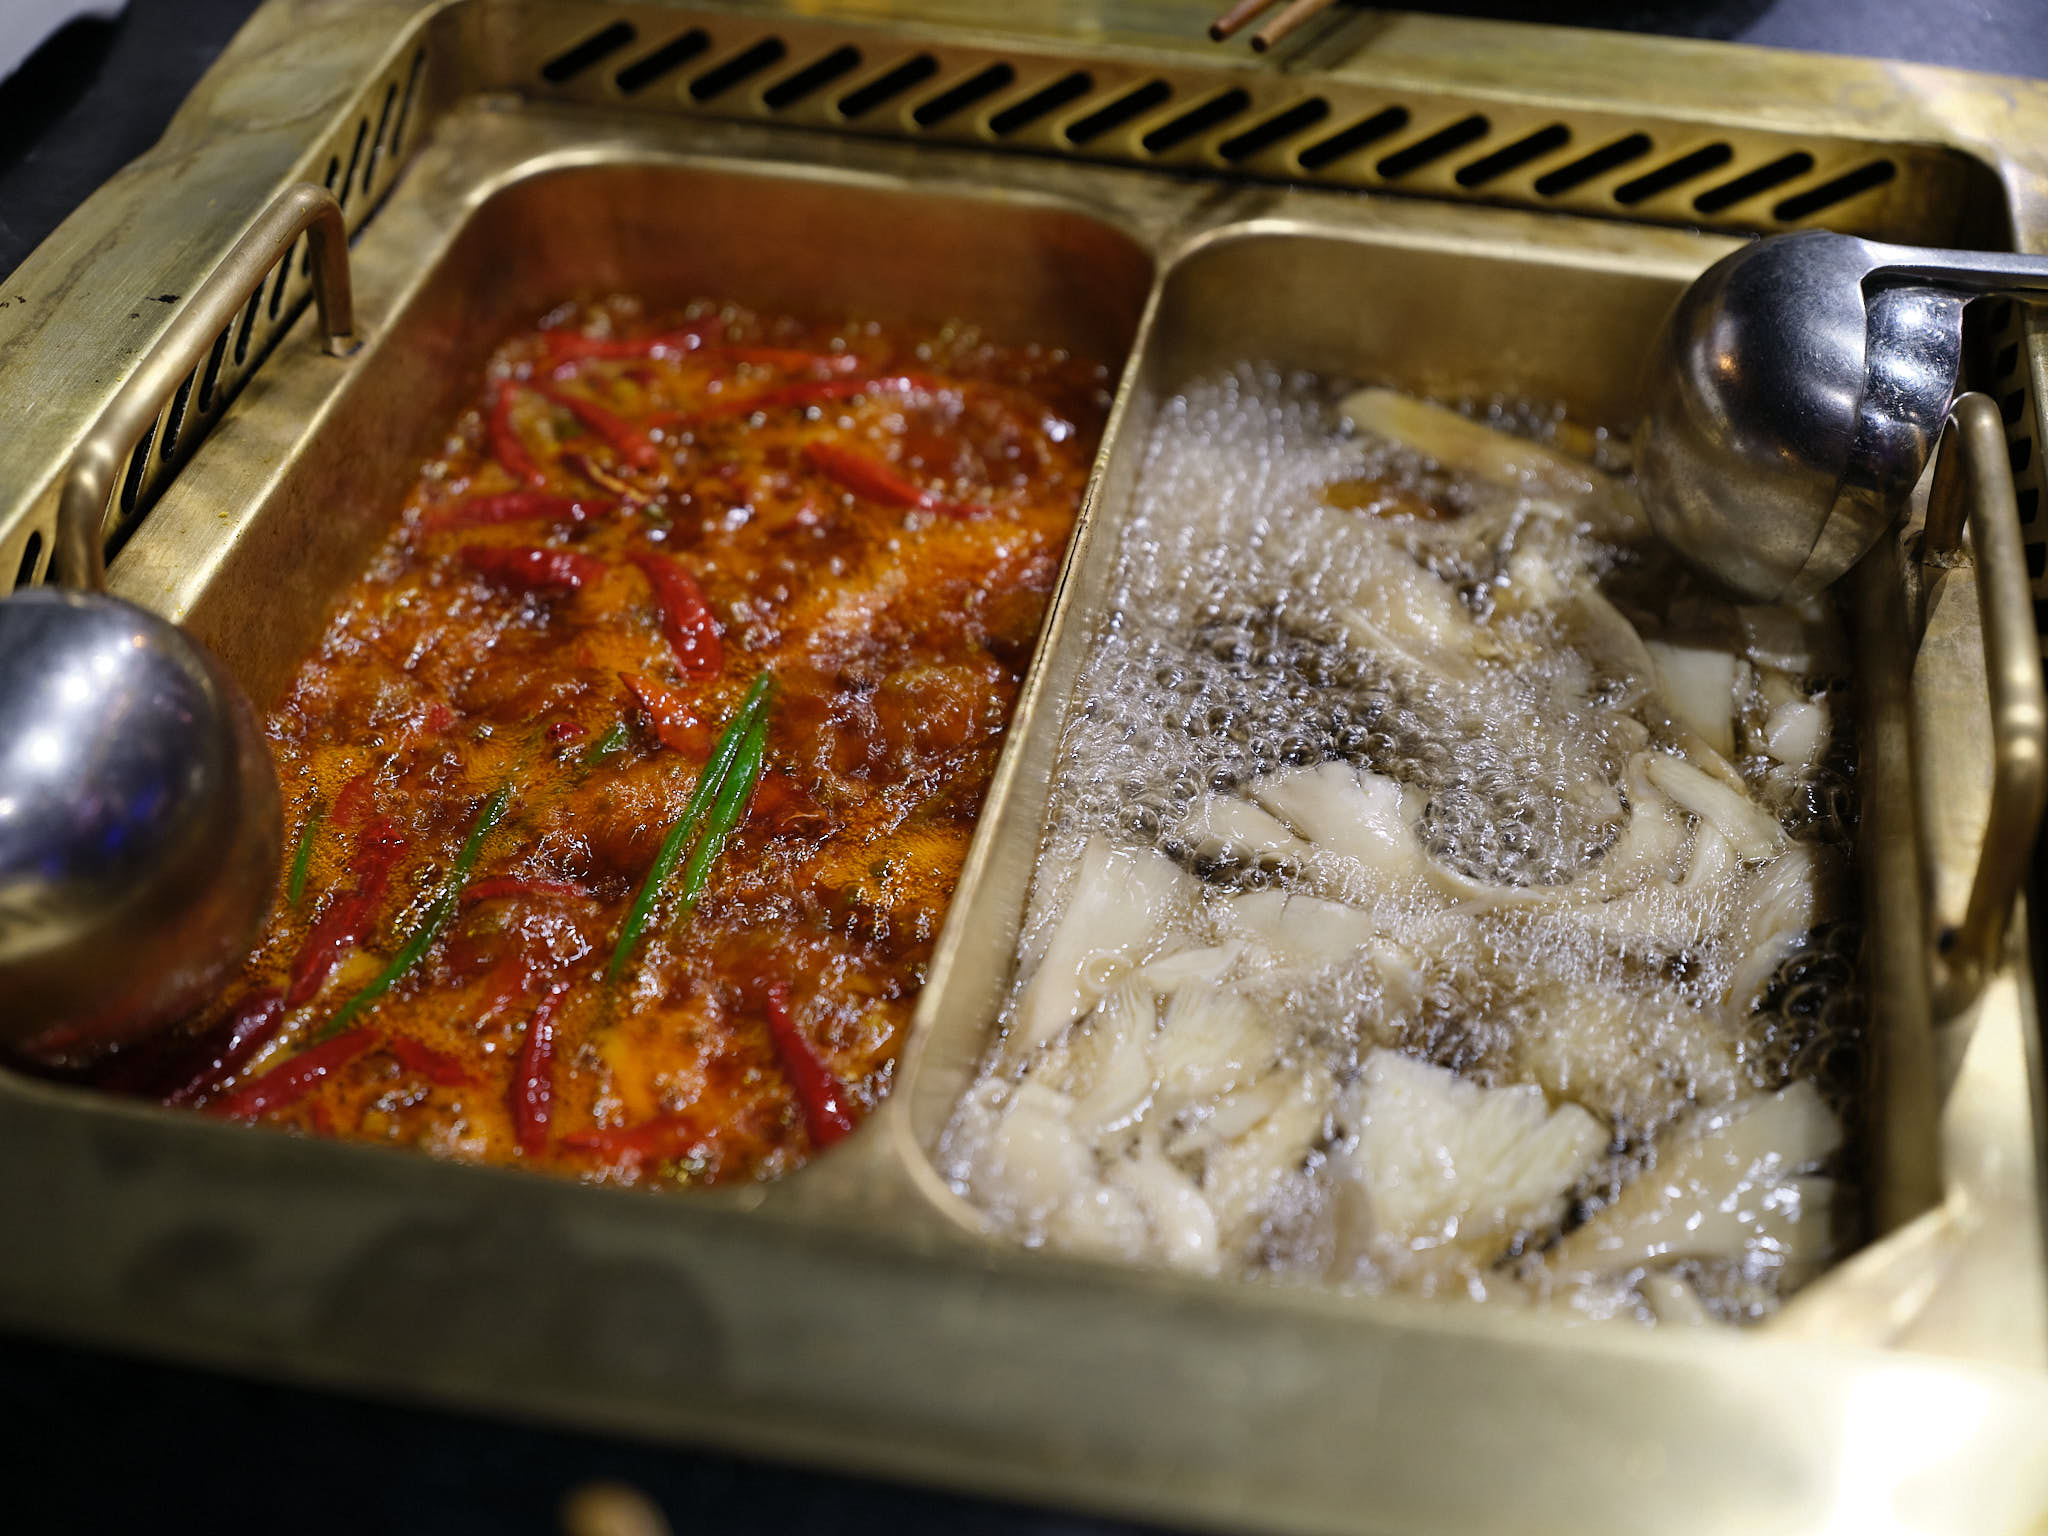 Chengdu style spicy hotpot boiling